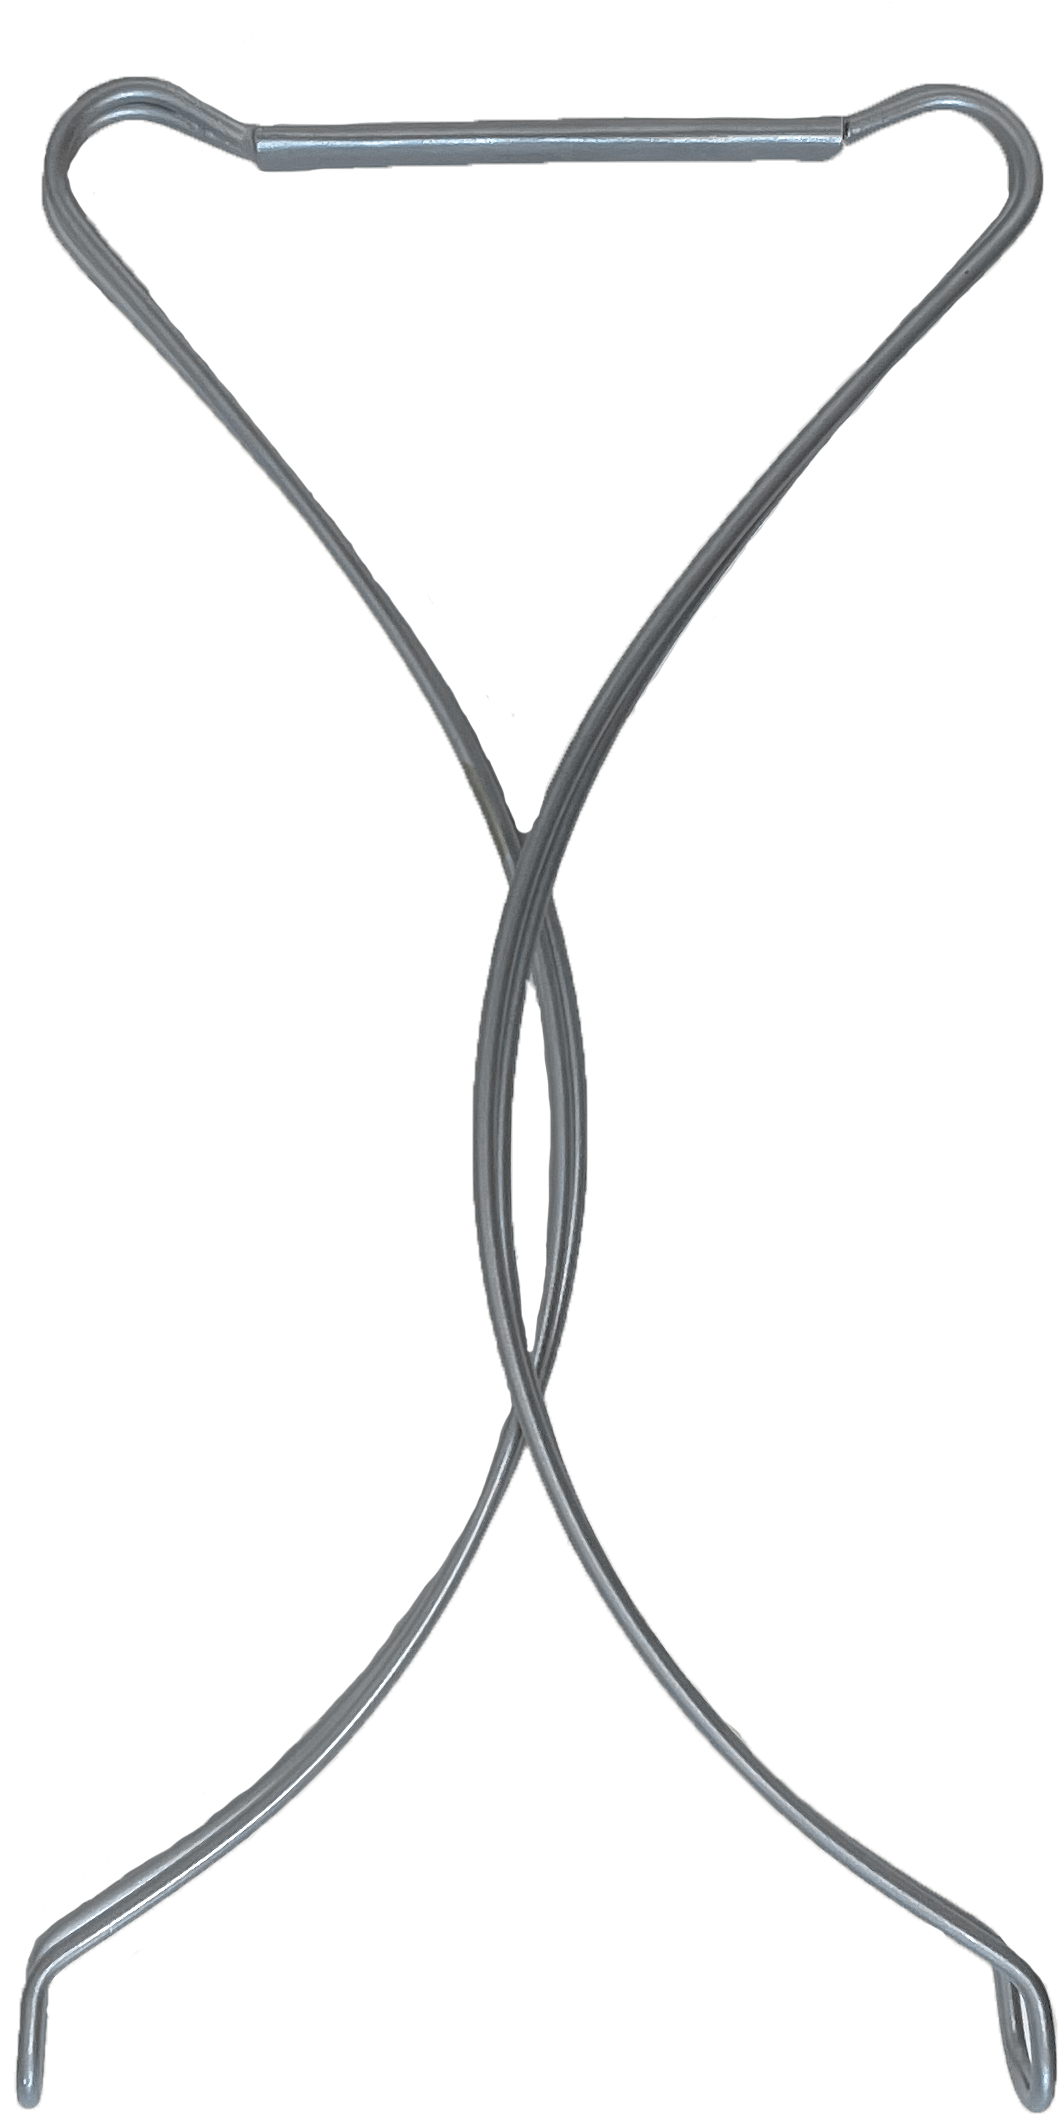 Stockman penile clamp zipser